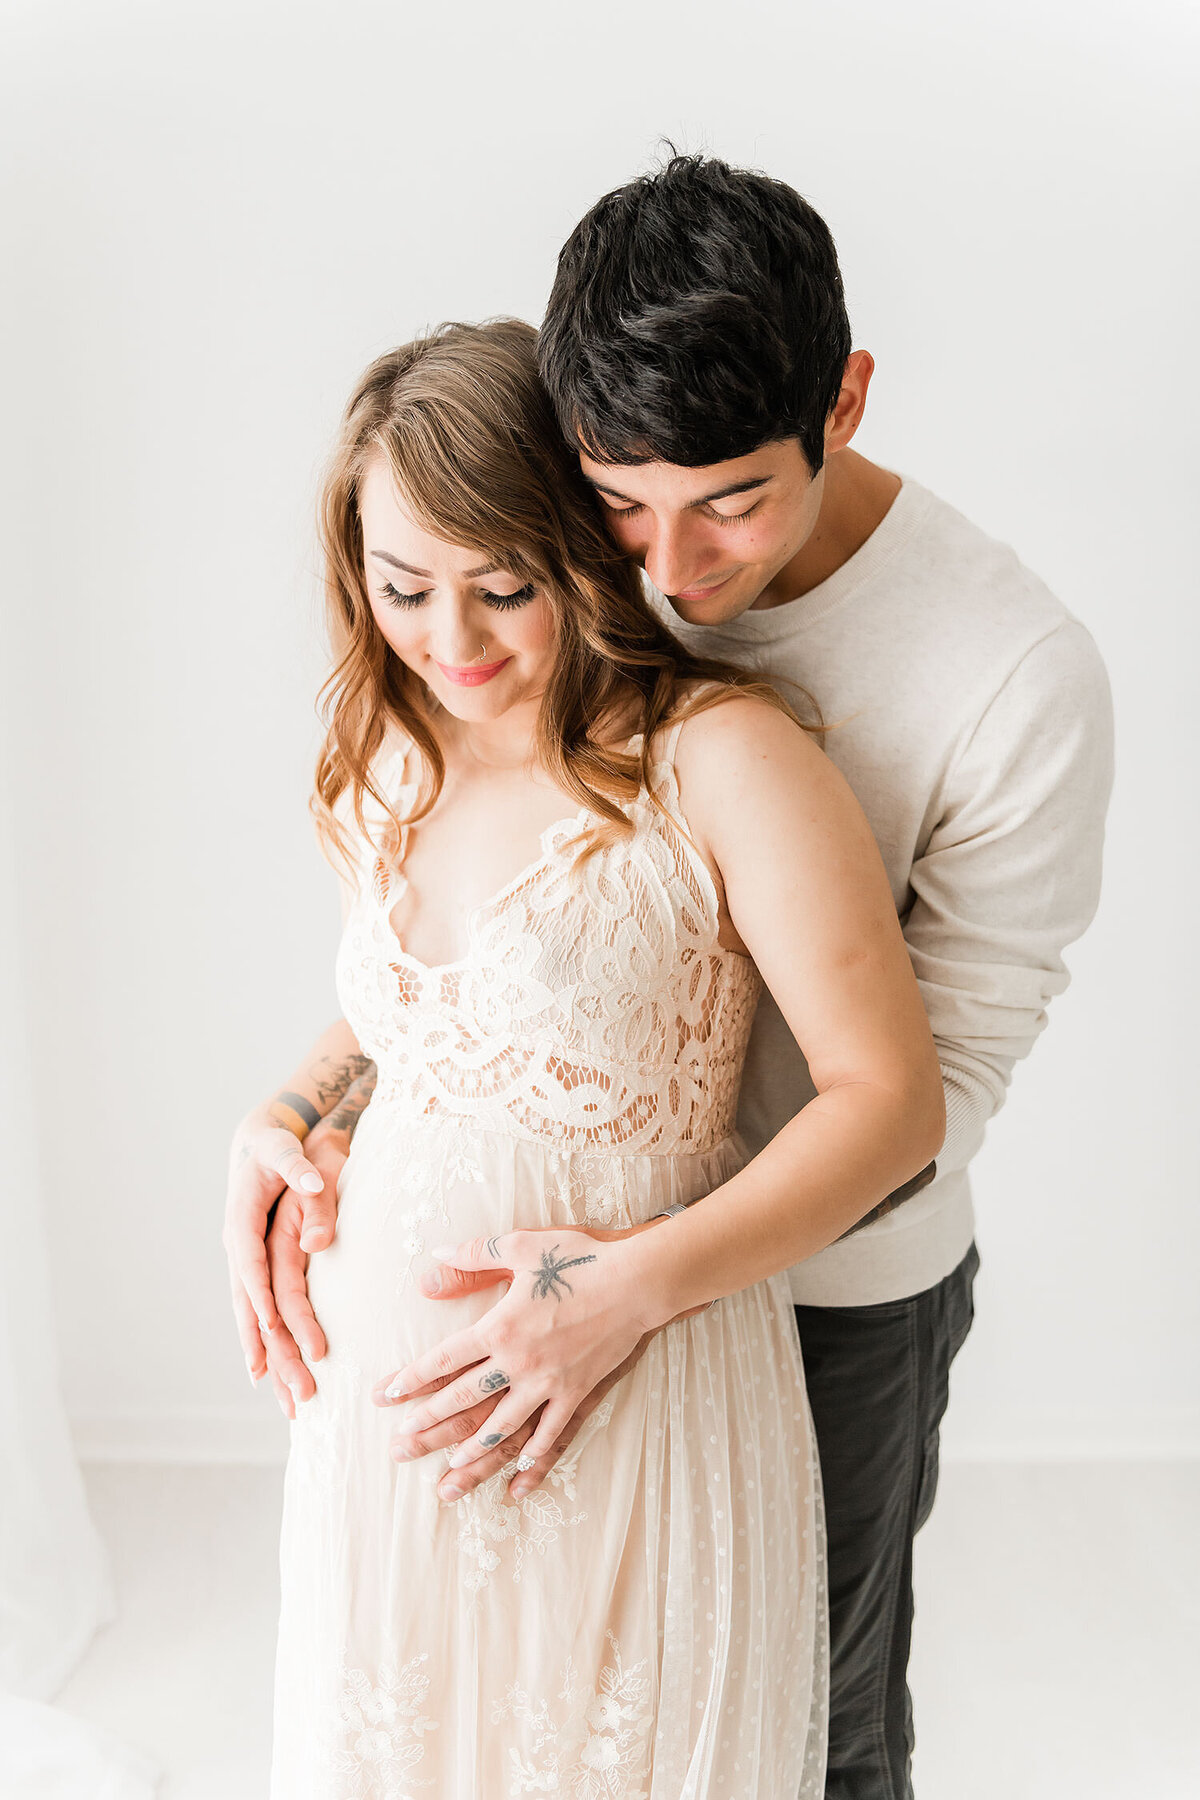 Pensacola-maternity-photographer-5